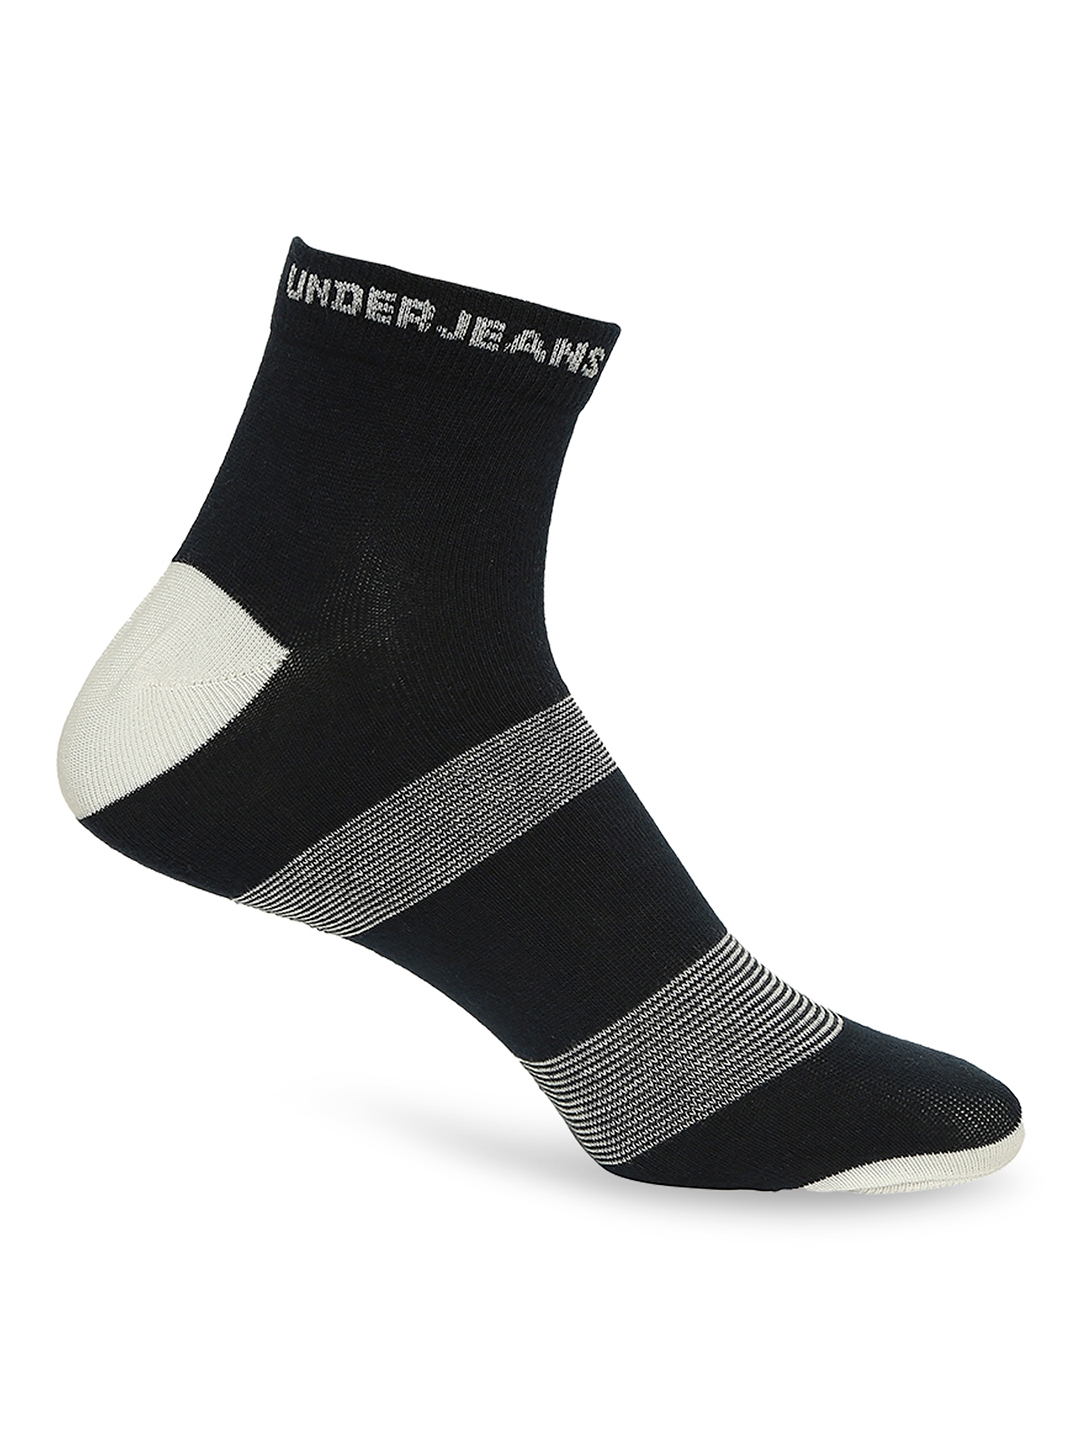 spykar | Underjeans by Spykar Premium Dark Grey & Navy Ankle Length Socks - Pack Of 2 3